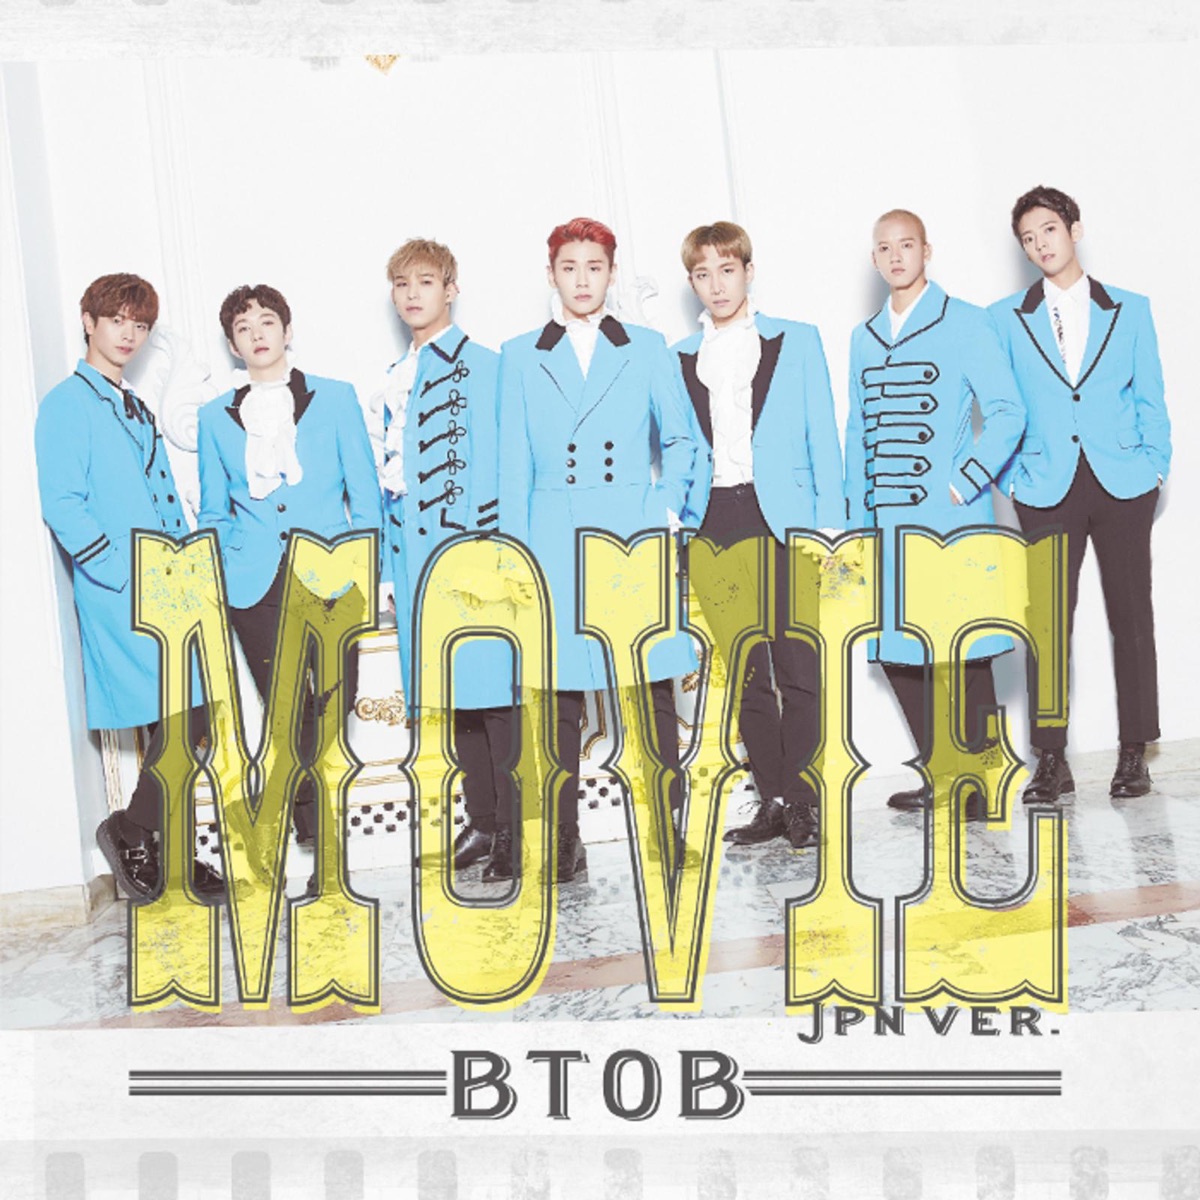 BTOB – MOVIE (JPN ver.) – Single